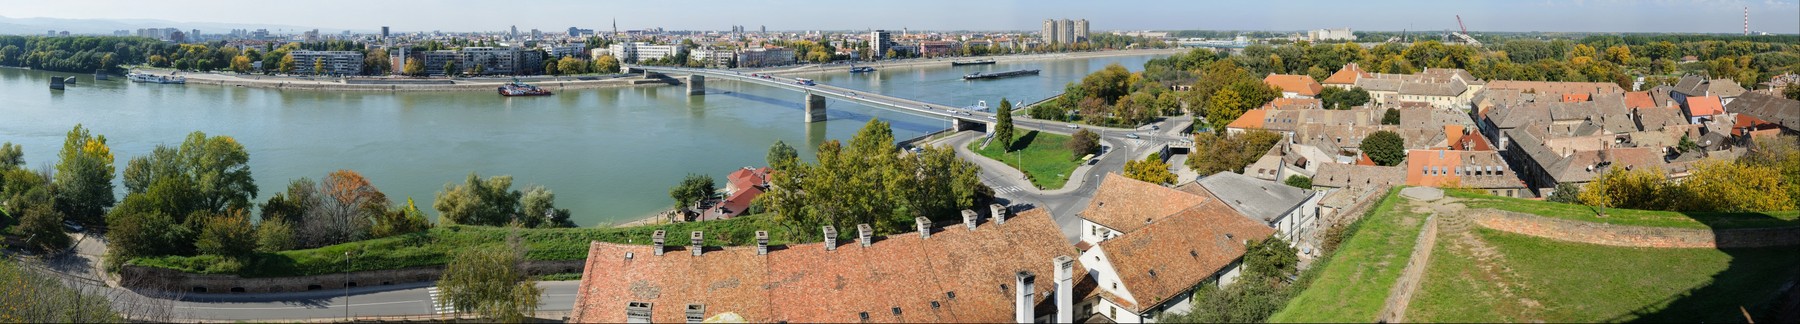 Novi Sad - Gigapixel panorama